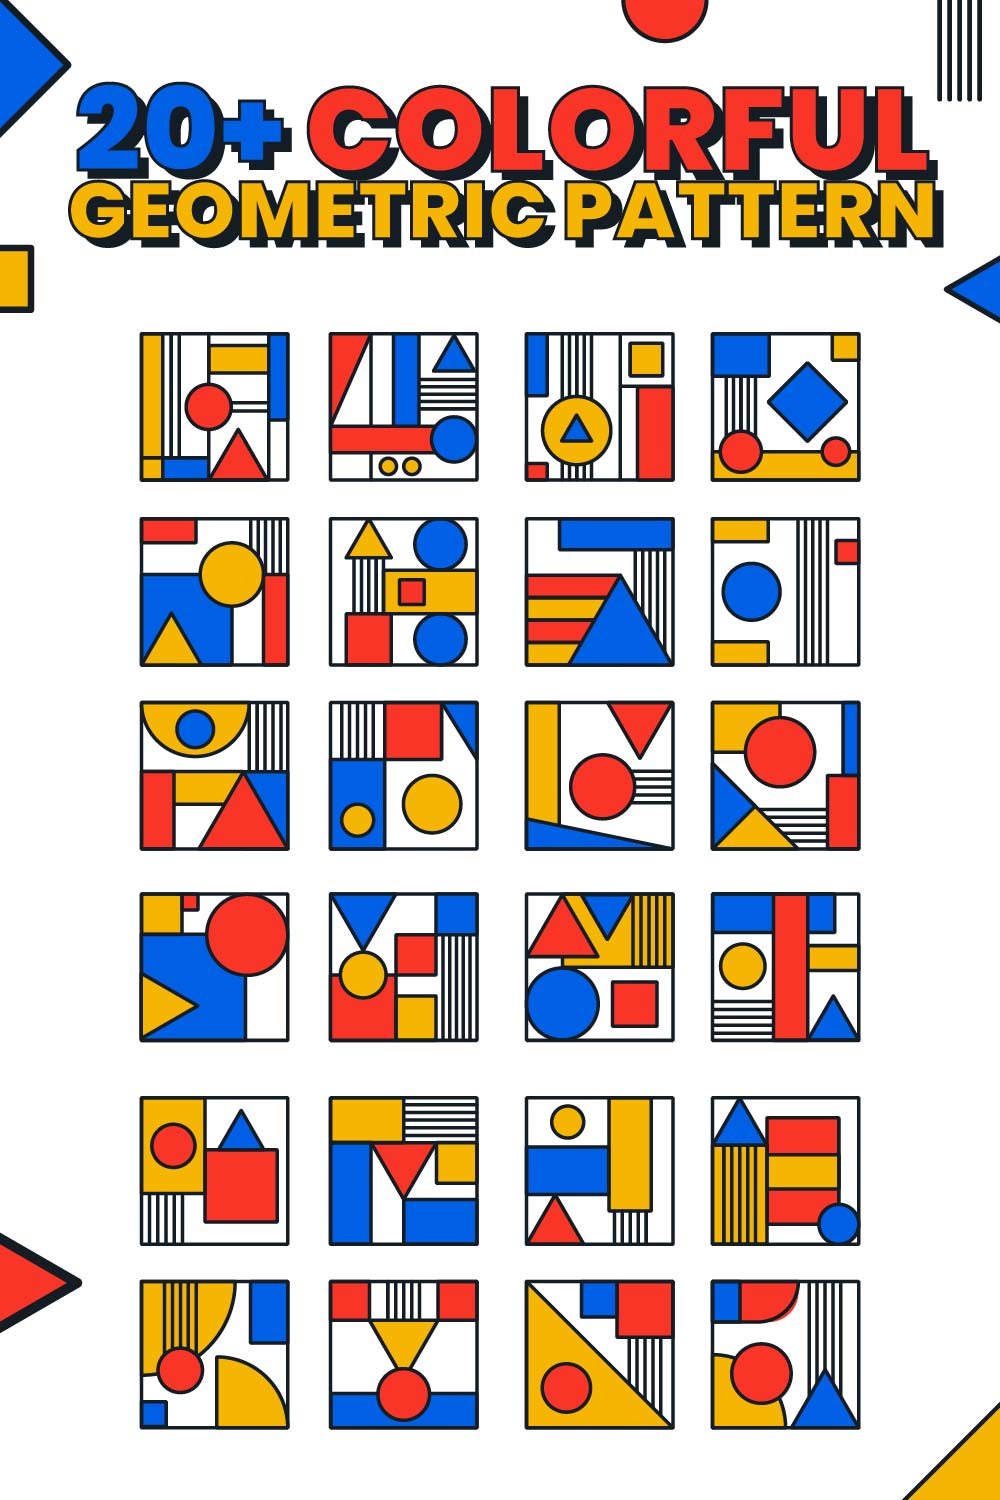 20 Plus Colorful Geometric Shape Pattern Pinterest Image.